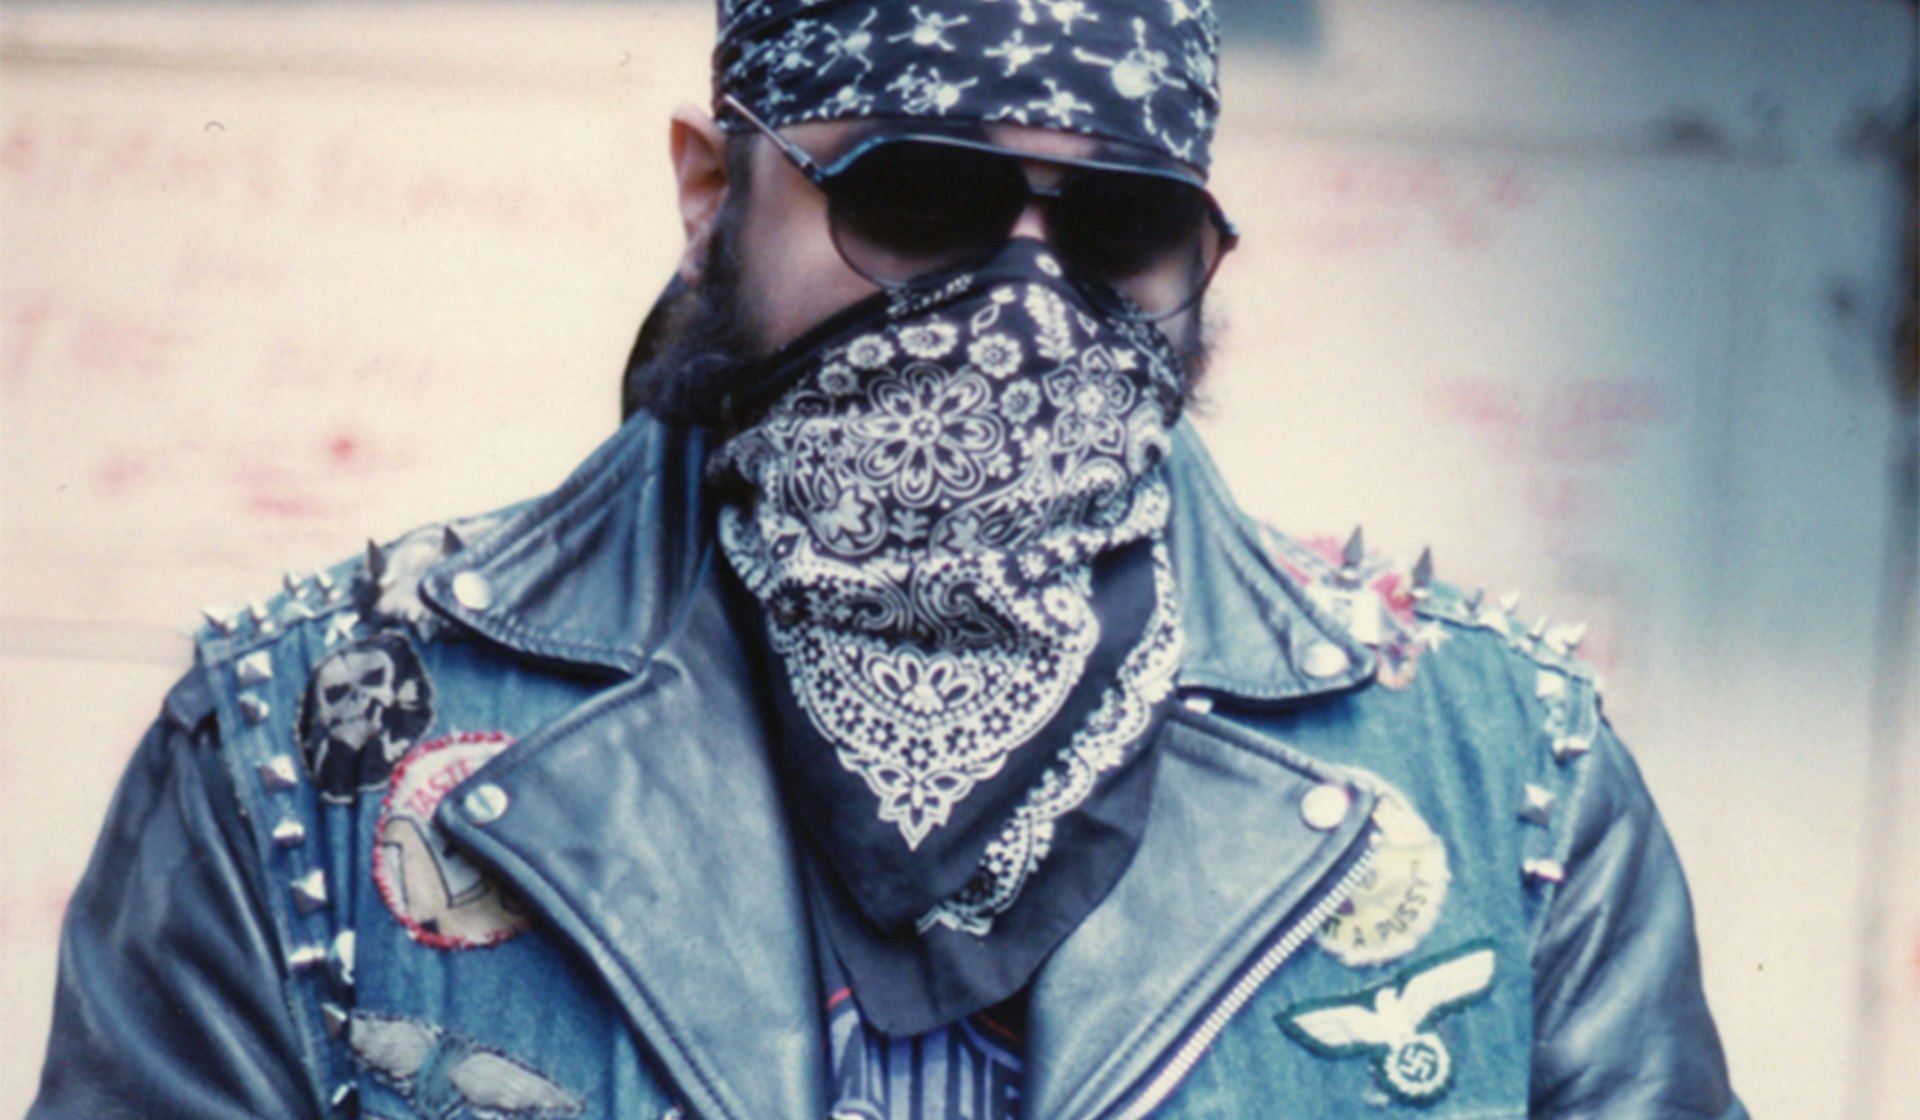 Meet the leader of the Lower East Side’s last street gang